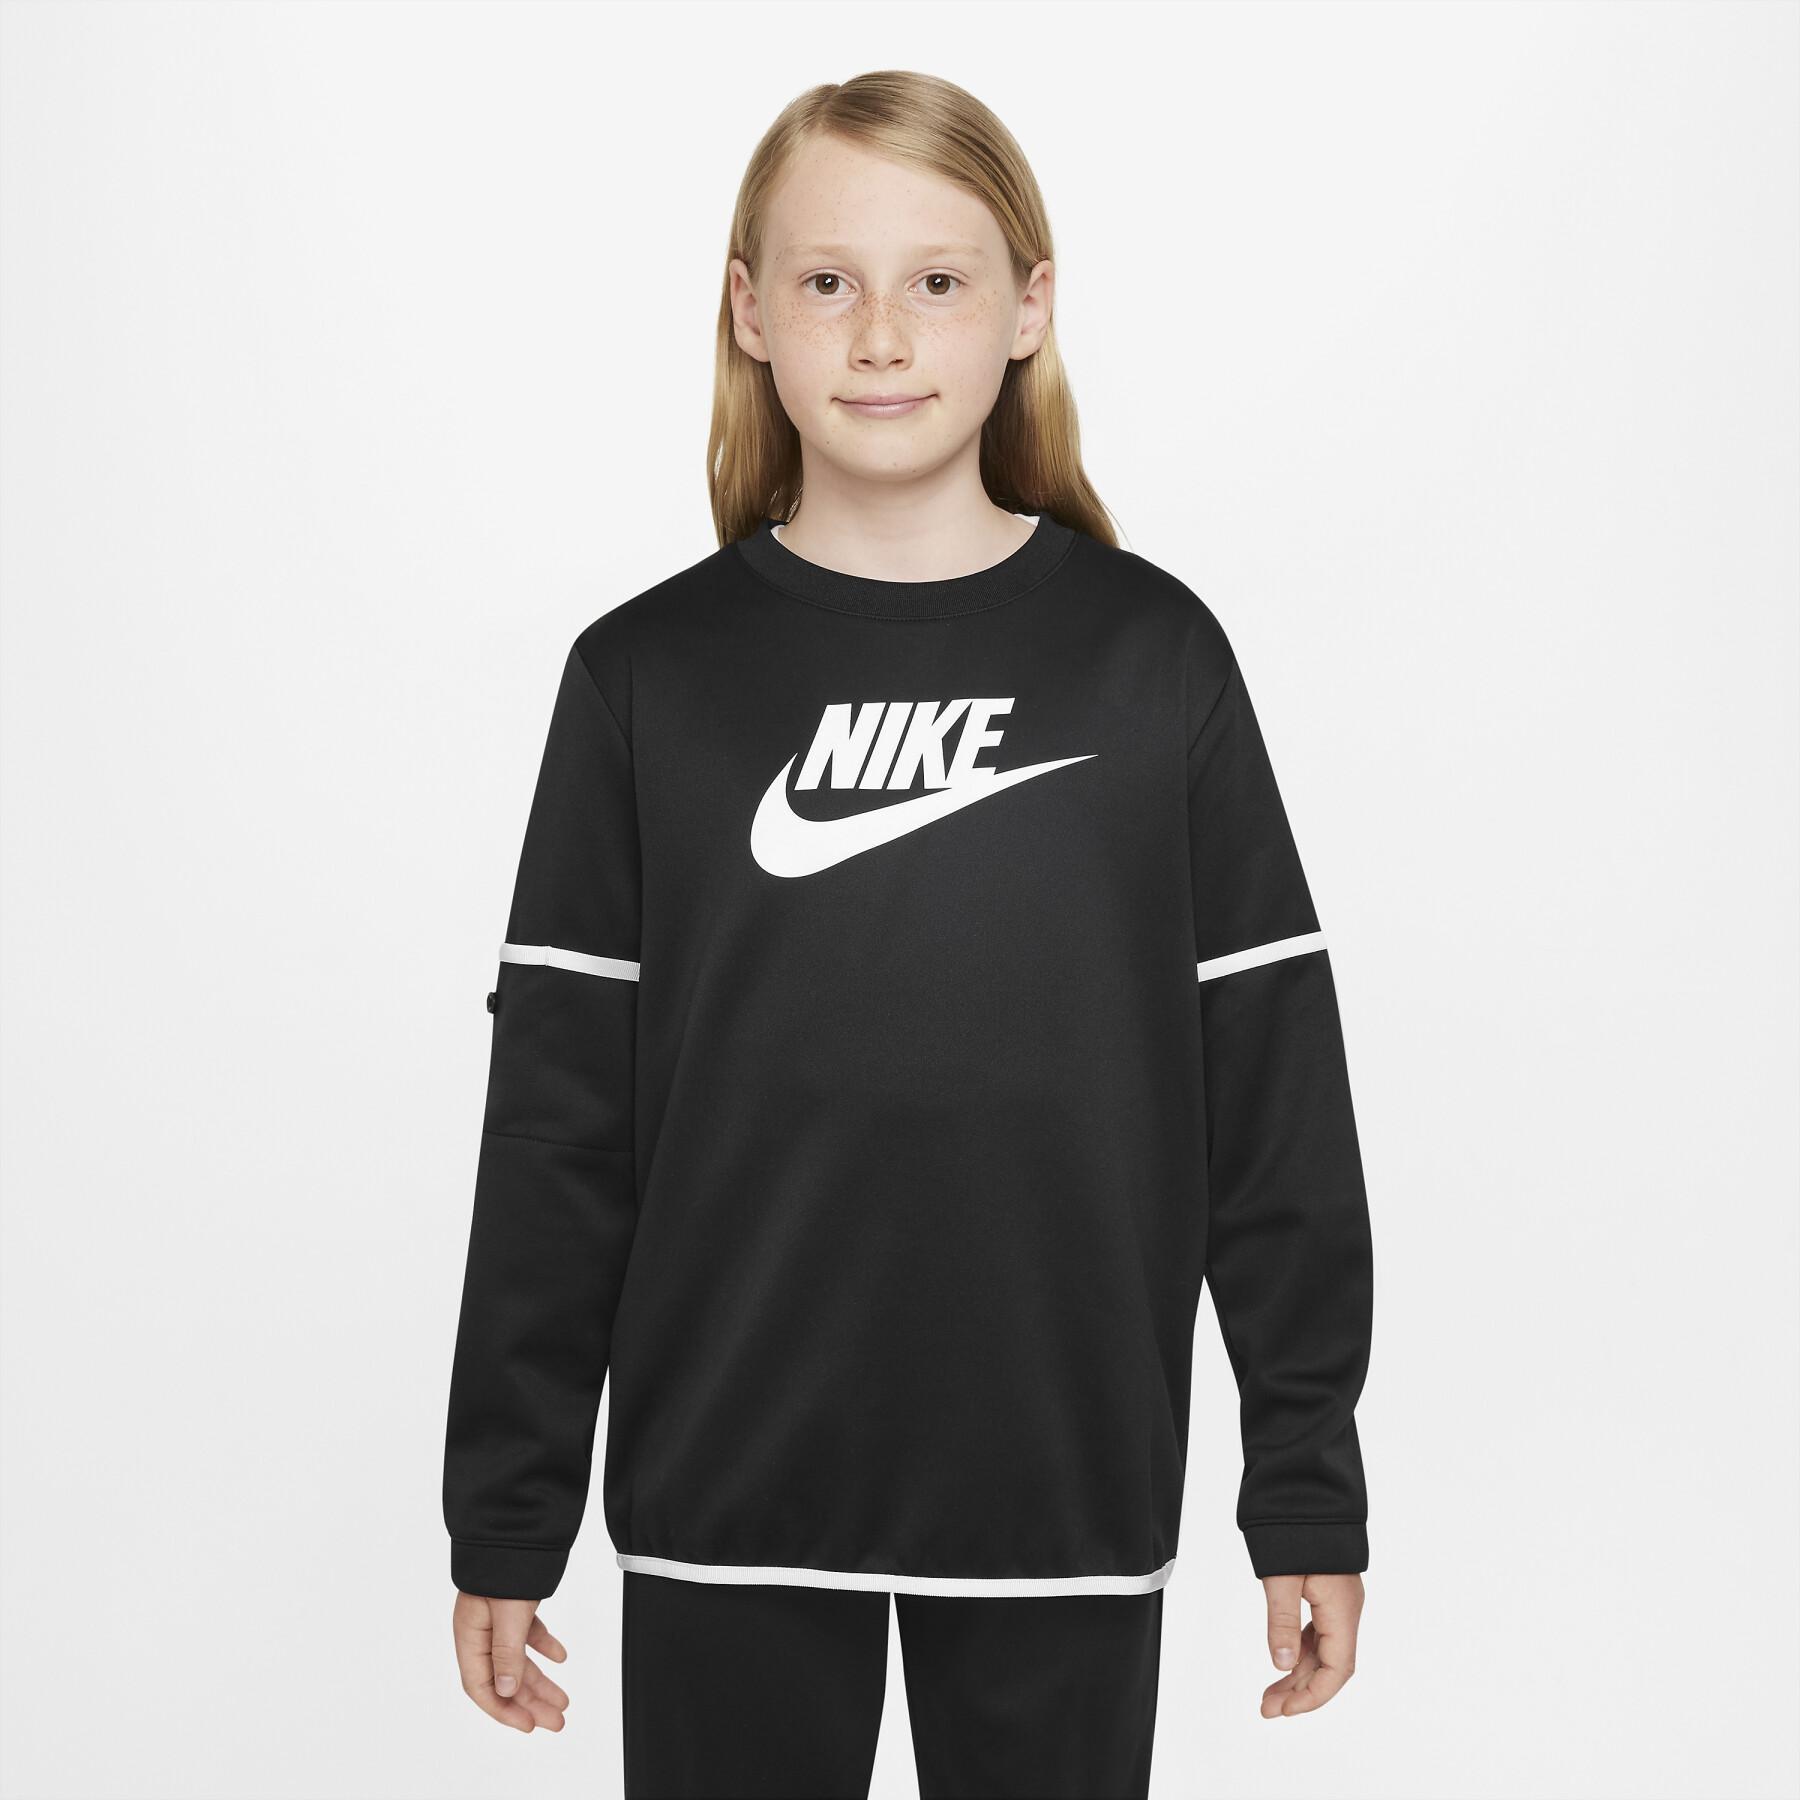 Tuta per bambini Nike Futura